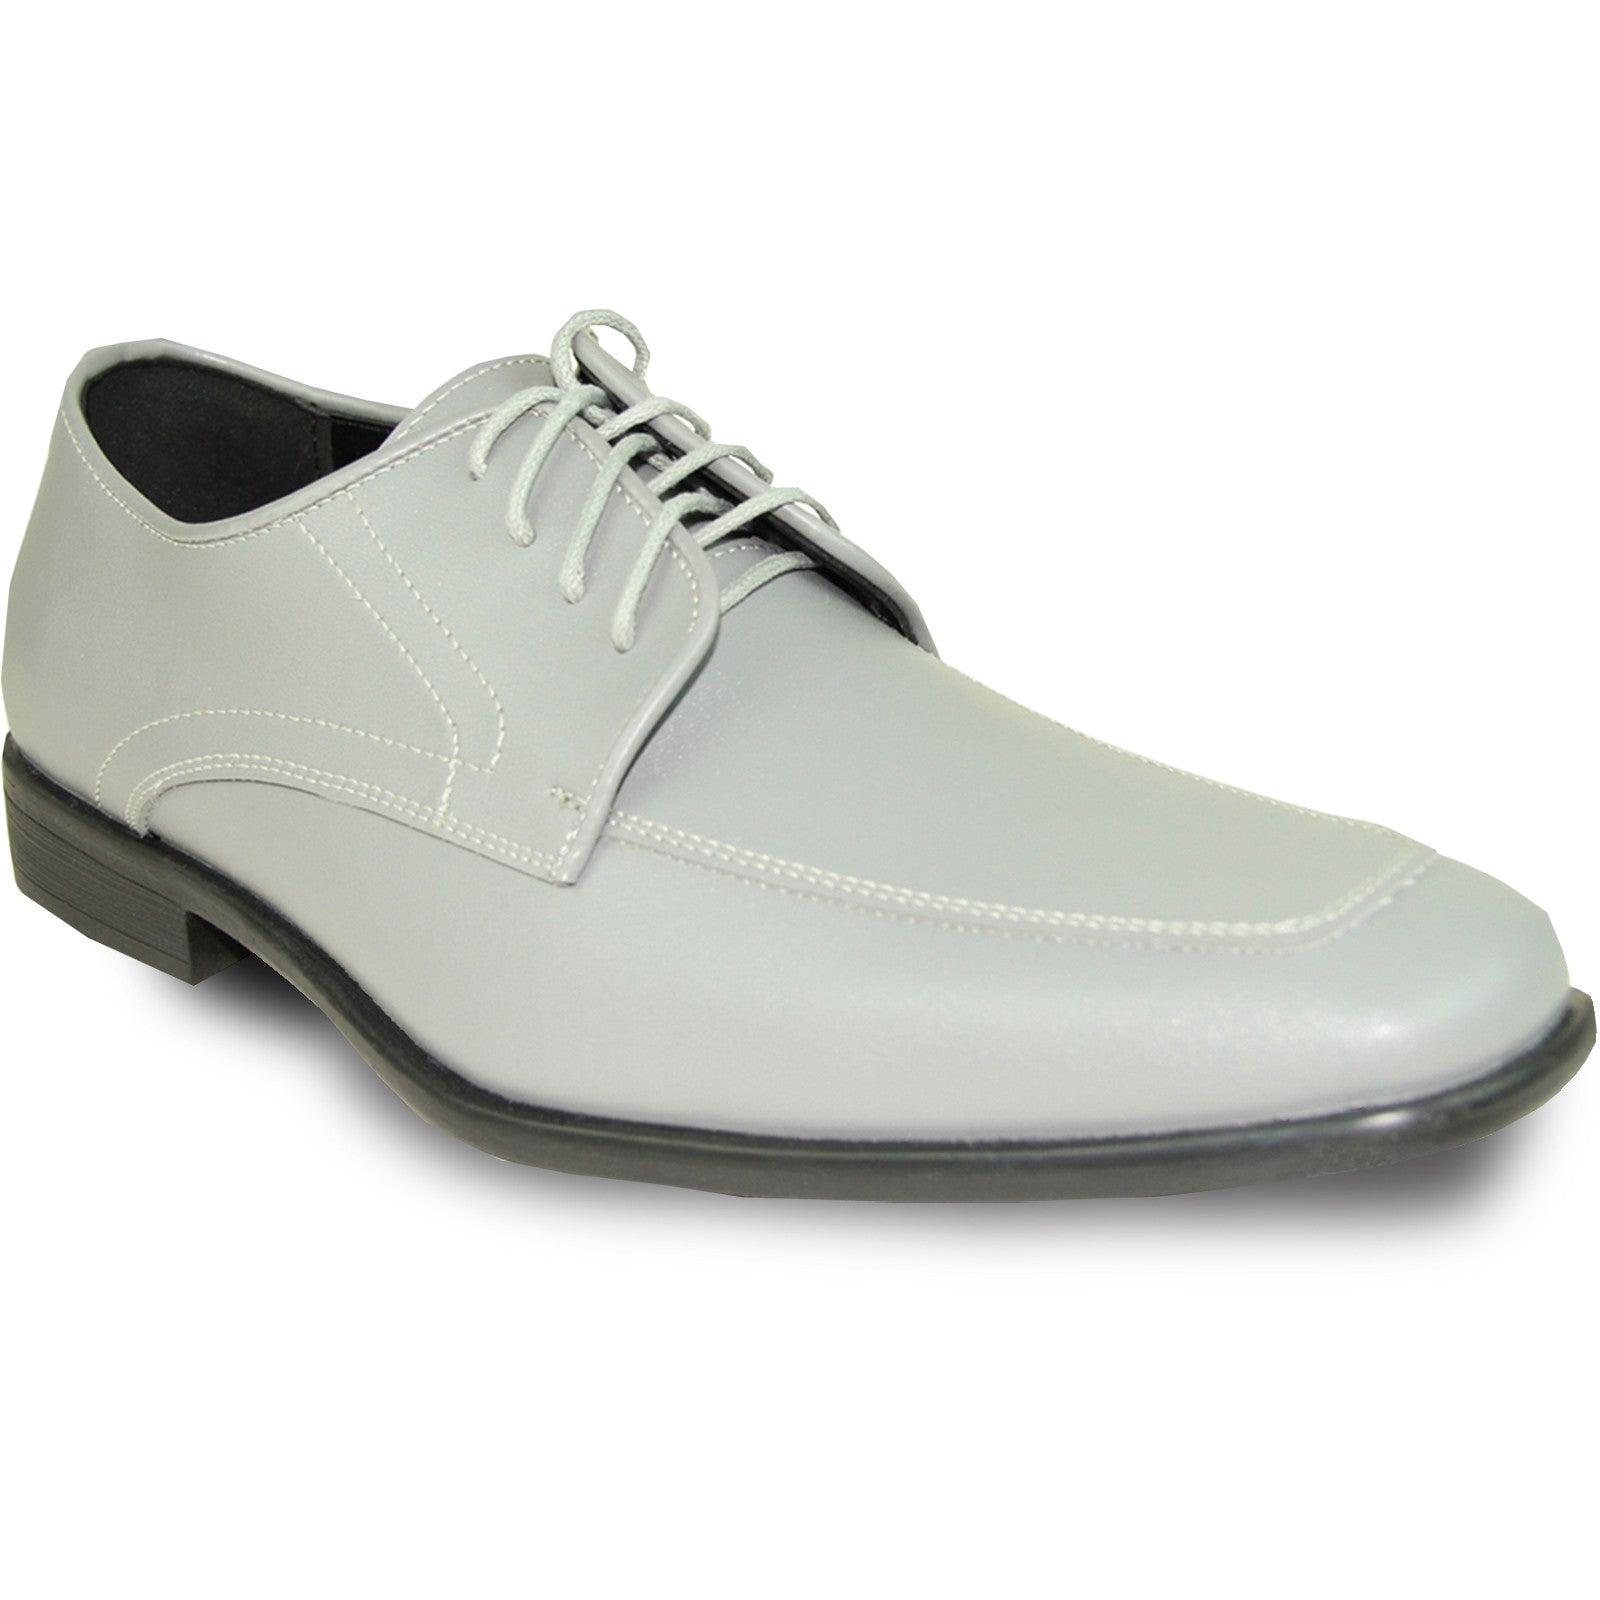 "Charcoal Grey Oxford Men's Formal Dress & Tuxedo Shoe"